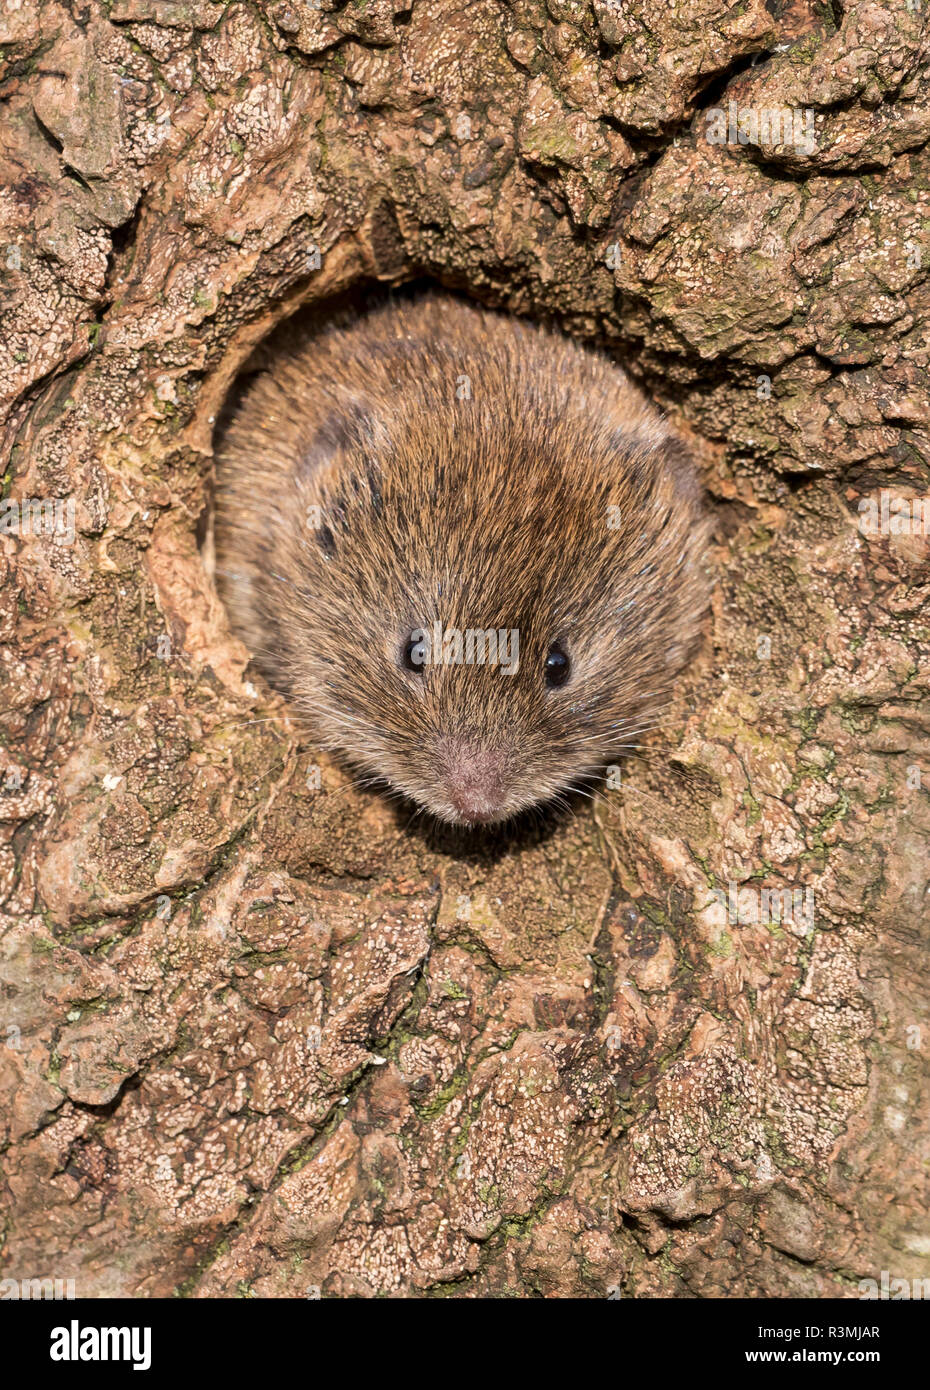 Field vole (Microtus agrestis) inside an old tree Stock Photo